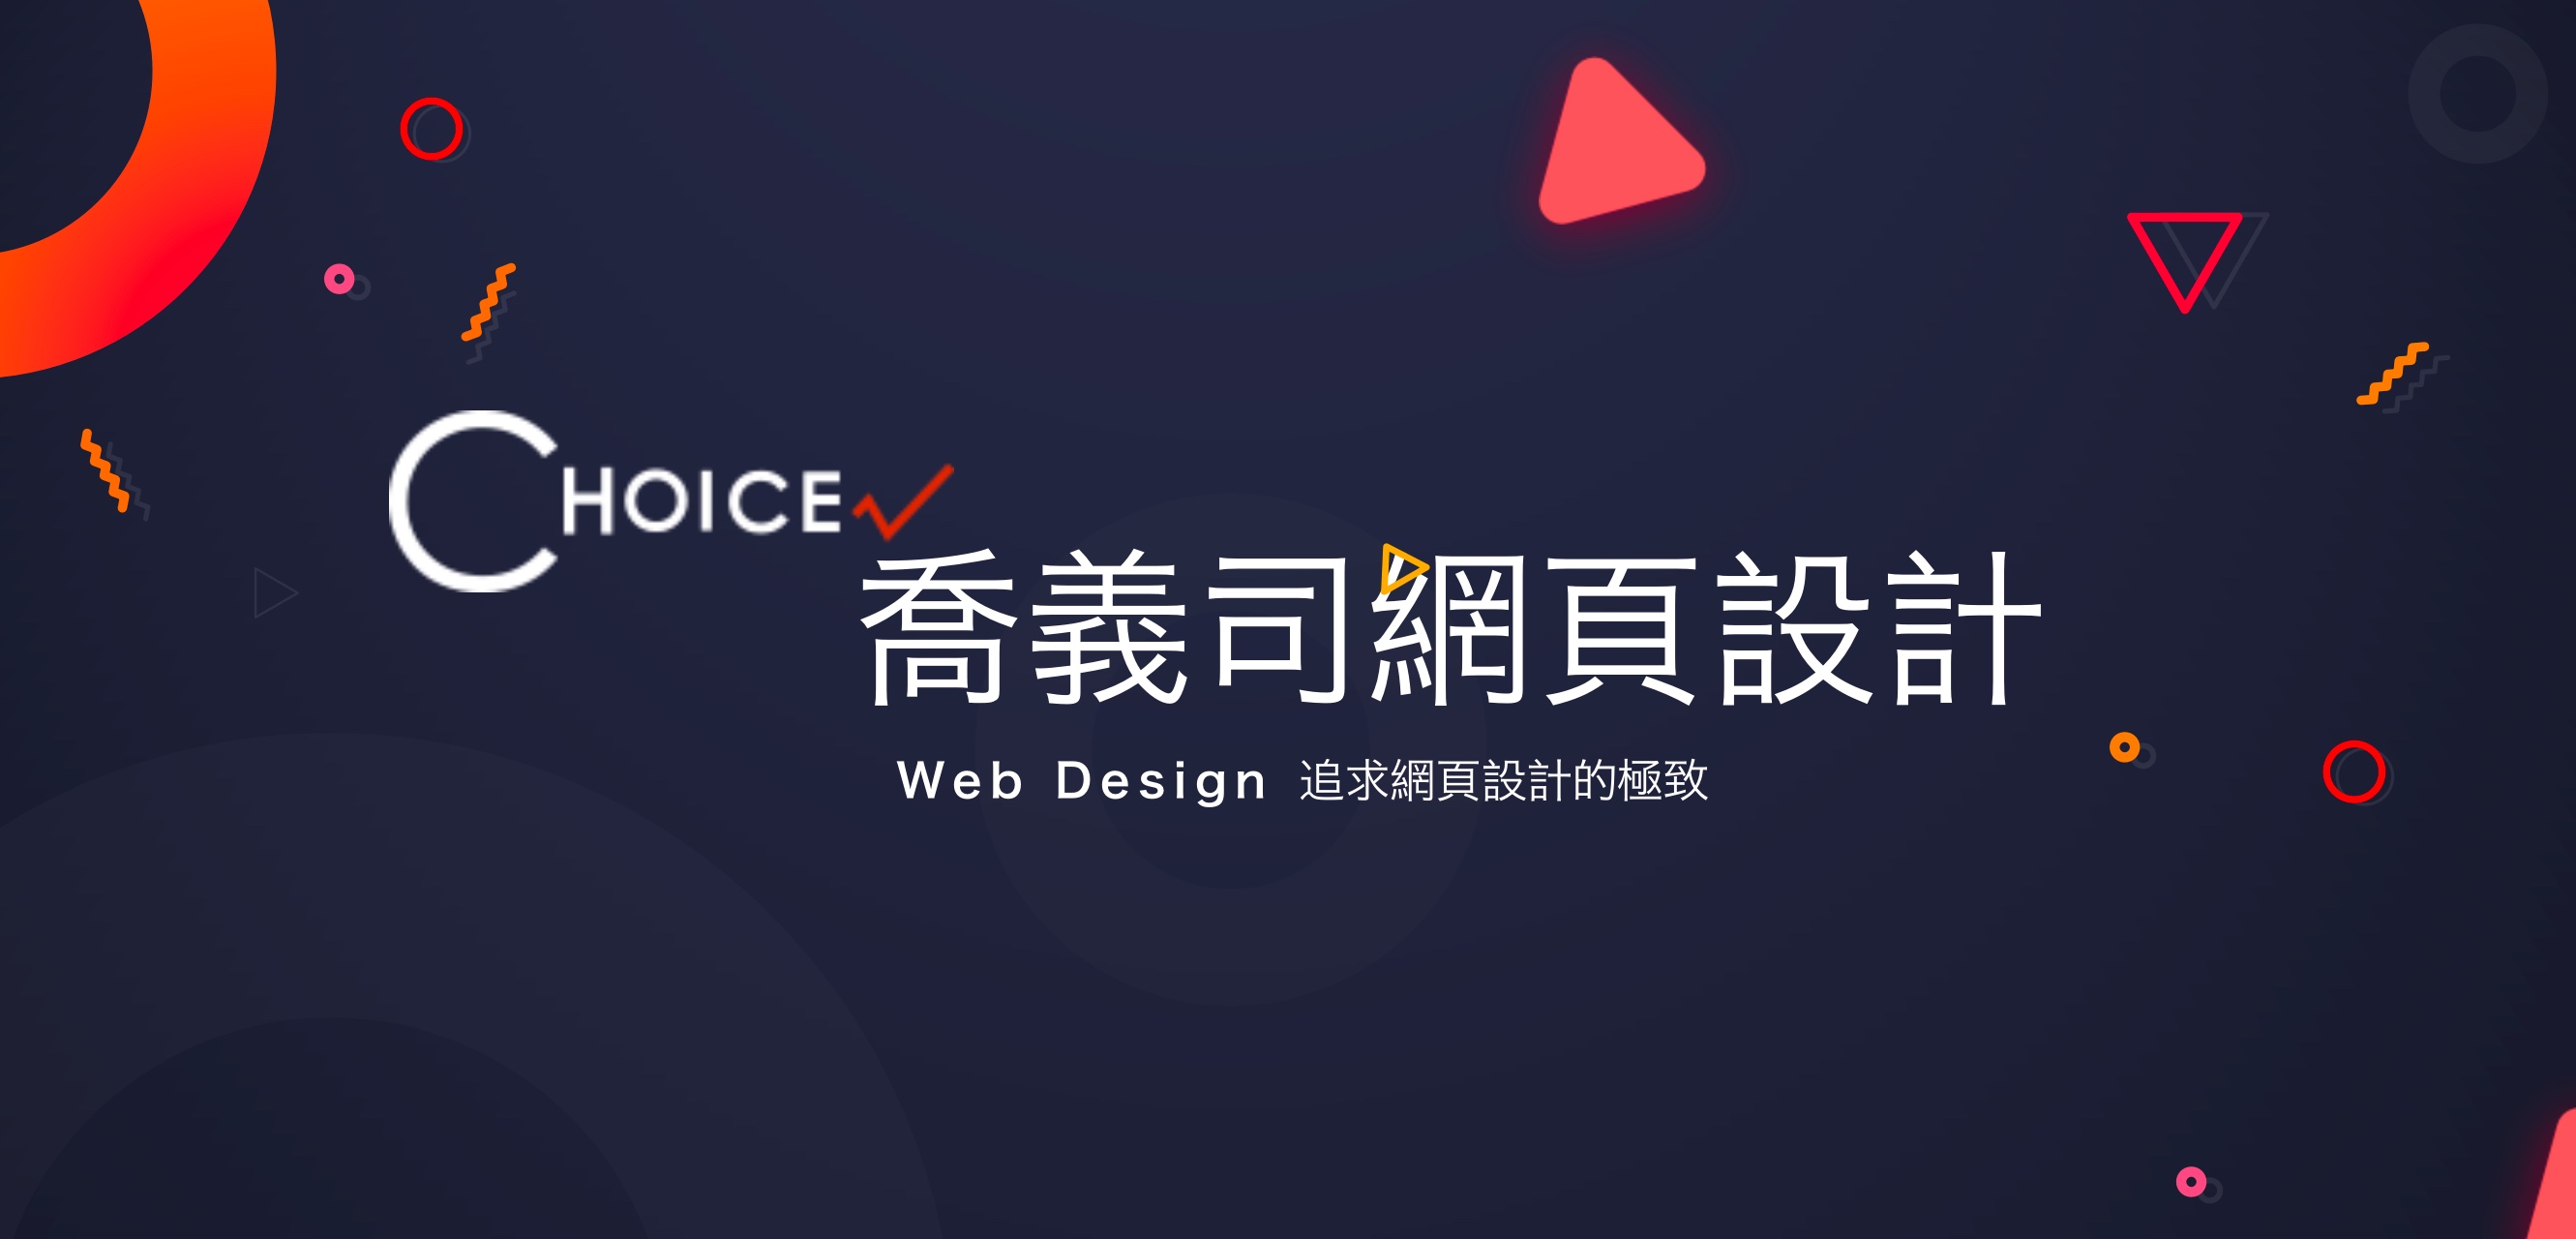 CHOICE 喬義司網頁設計公司